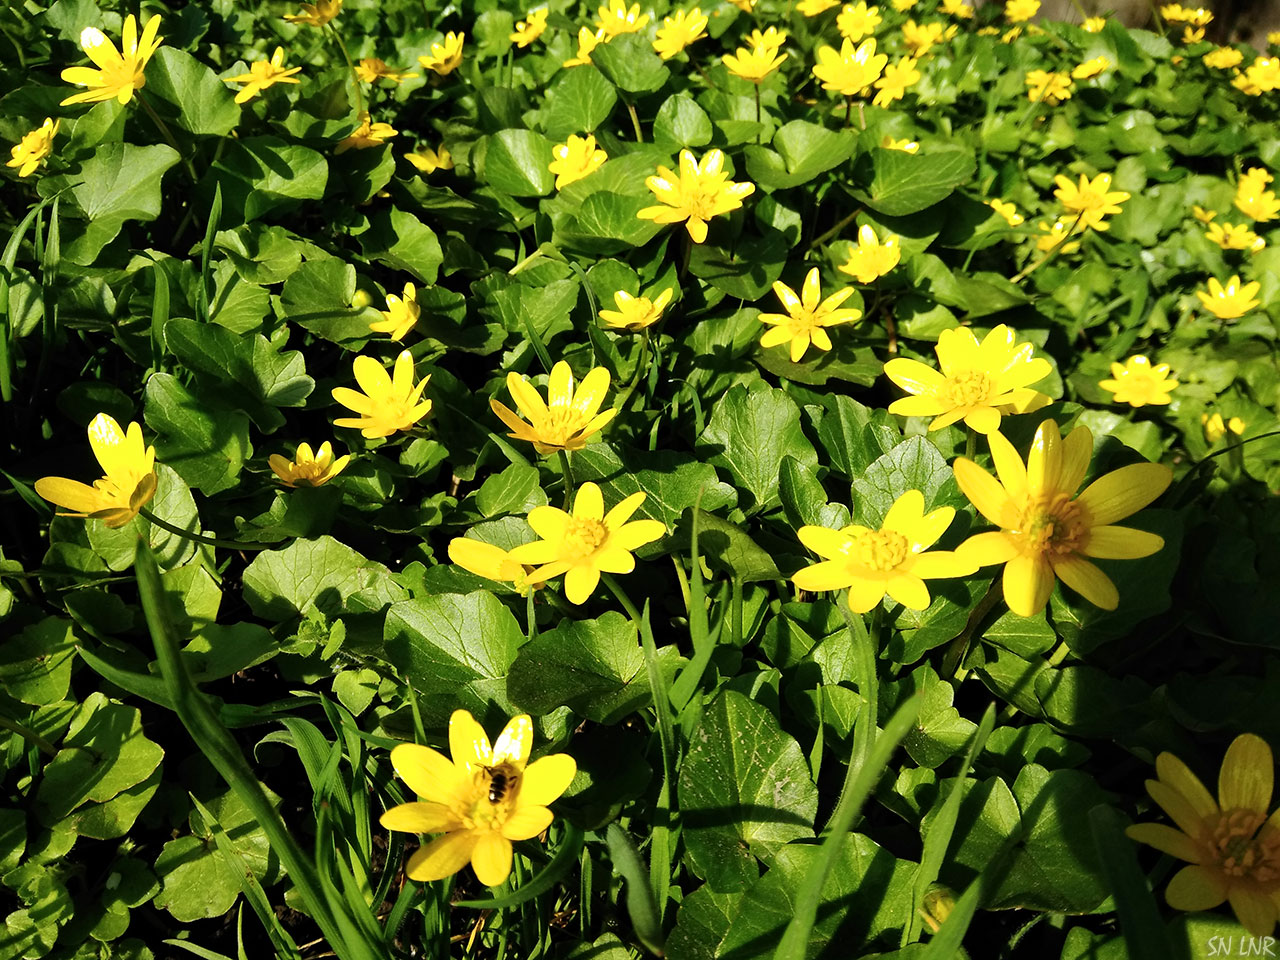 Цветок чистяк весенний фото и описание